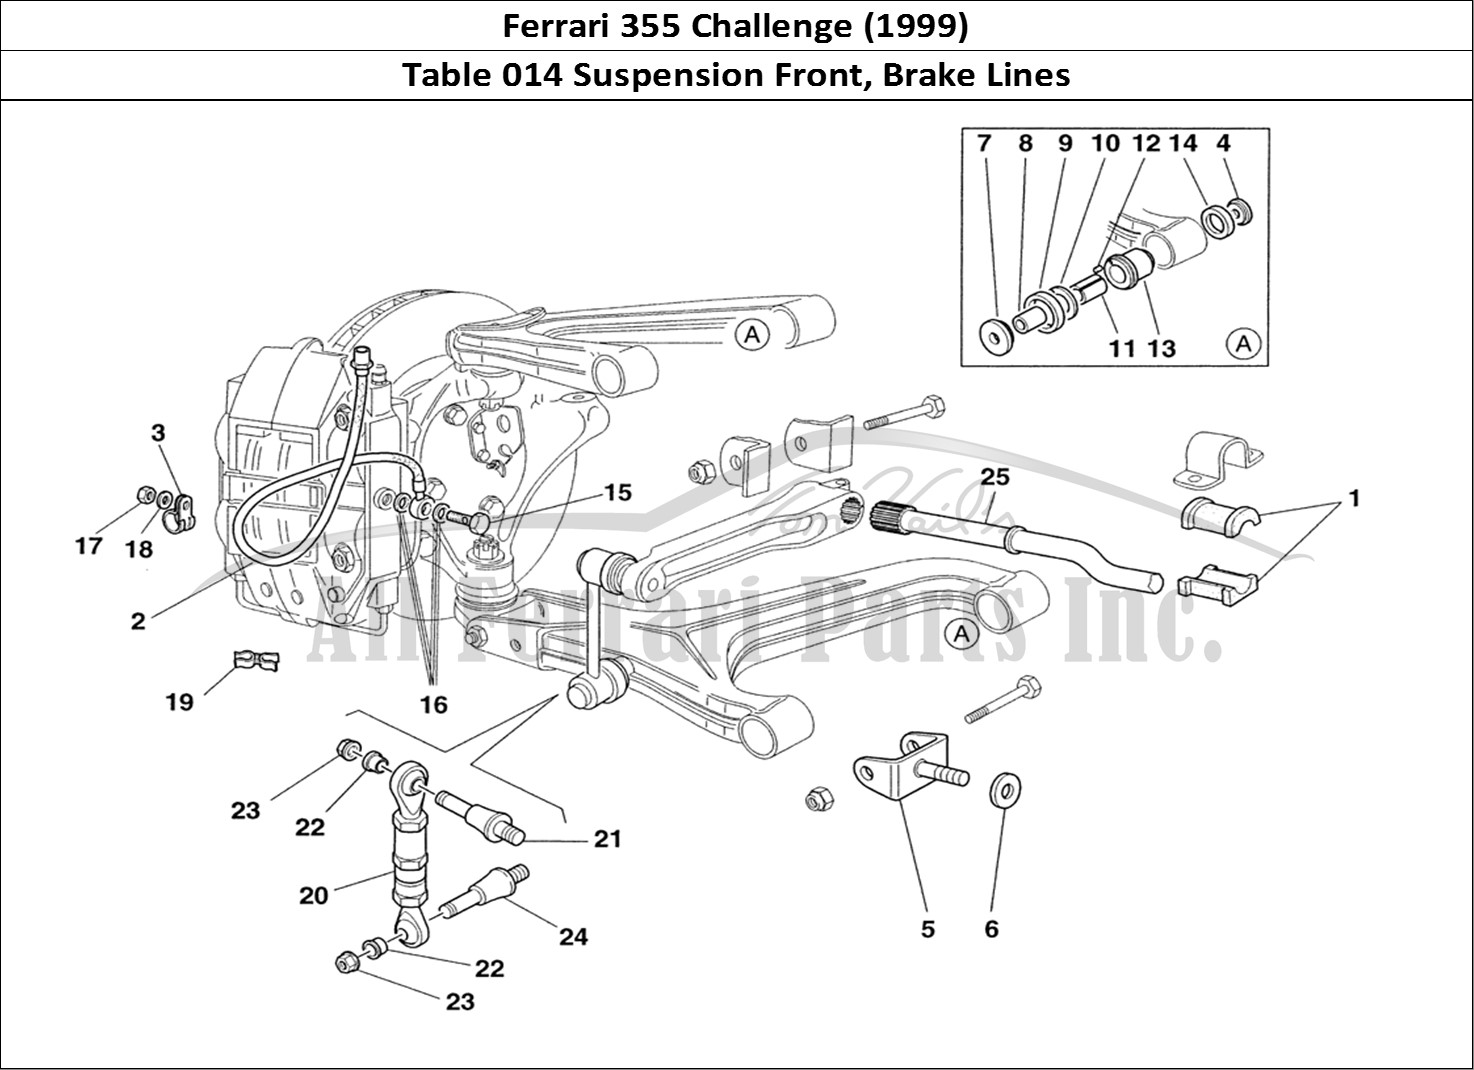 Ferrari Parts Ferrari 355 Challenge (1999) Page 014 Front Suspension and Brak